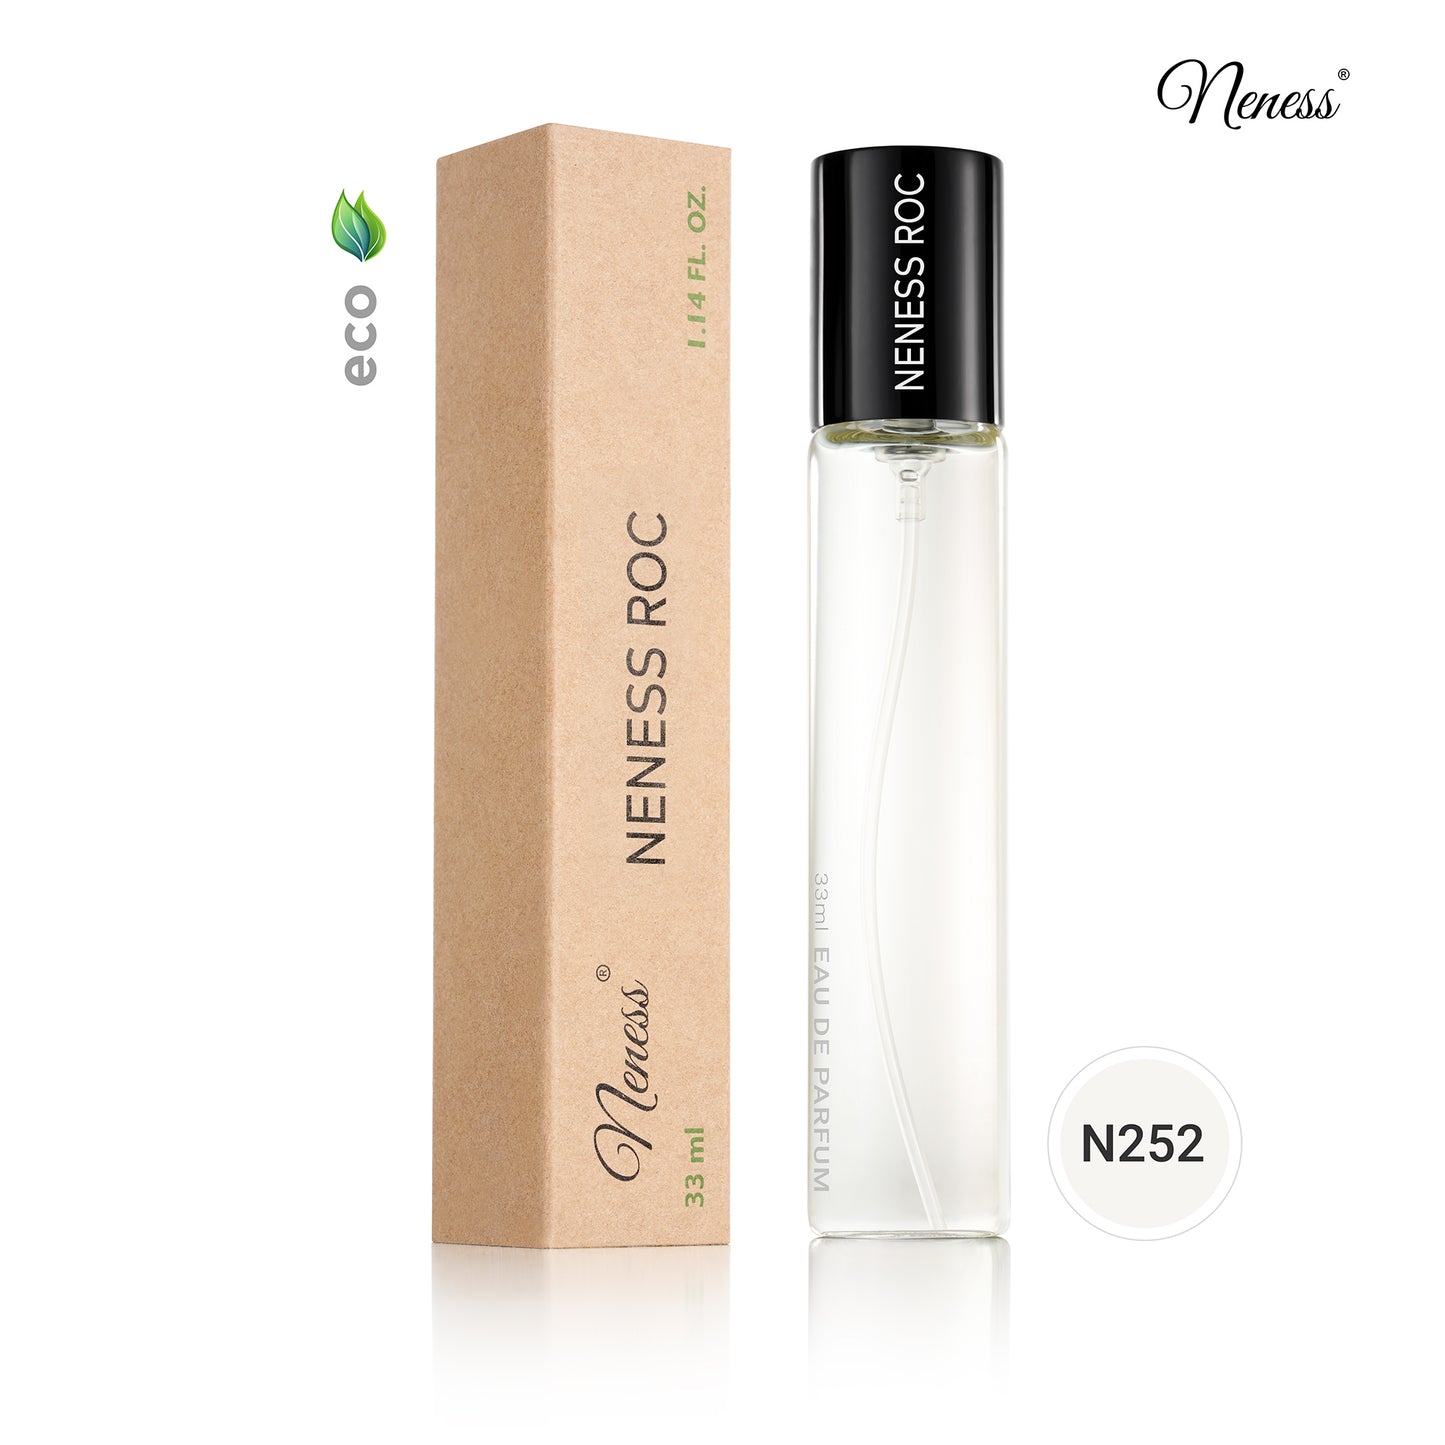 N252. Neness ROC - 33 ml - Unisex Perfumes